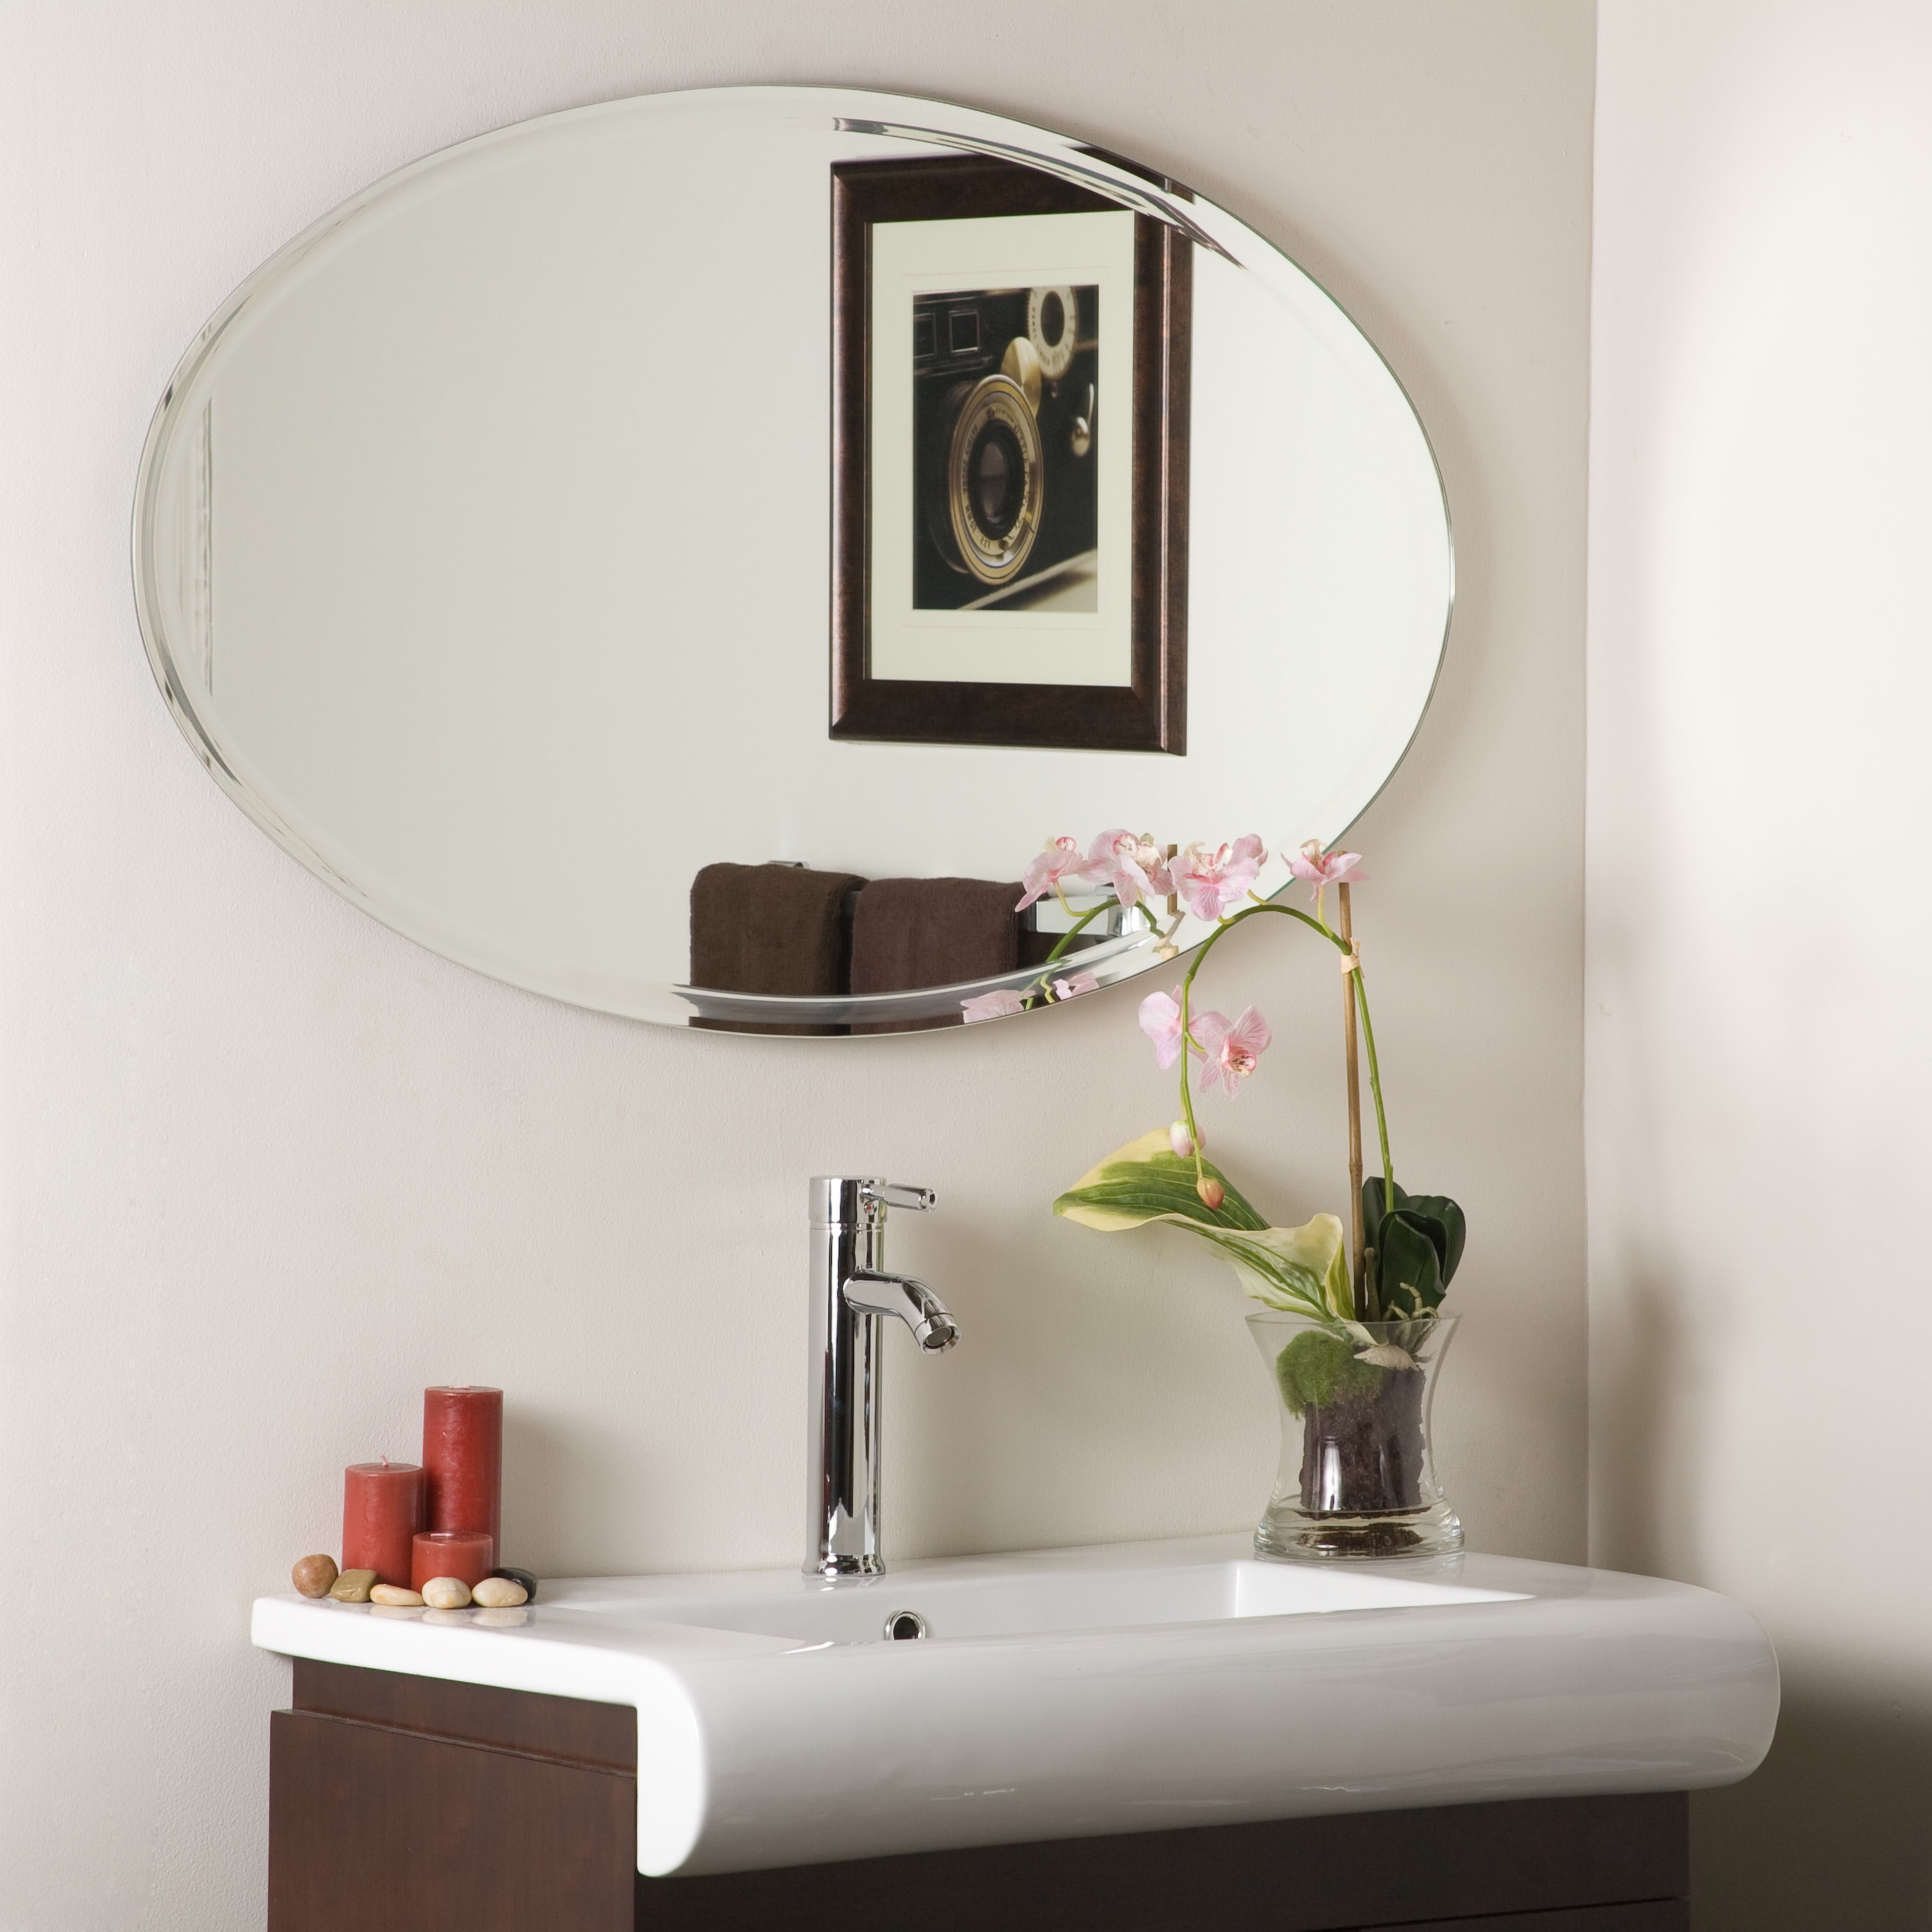 Extra Long Oval Wall Mirror Com, Frameless Oval Beveled Bathroom Mirror